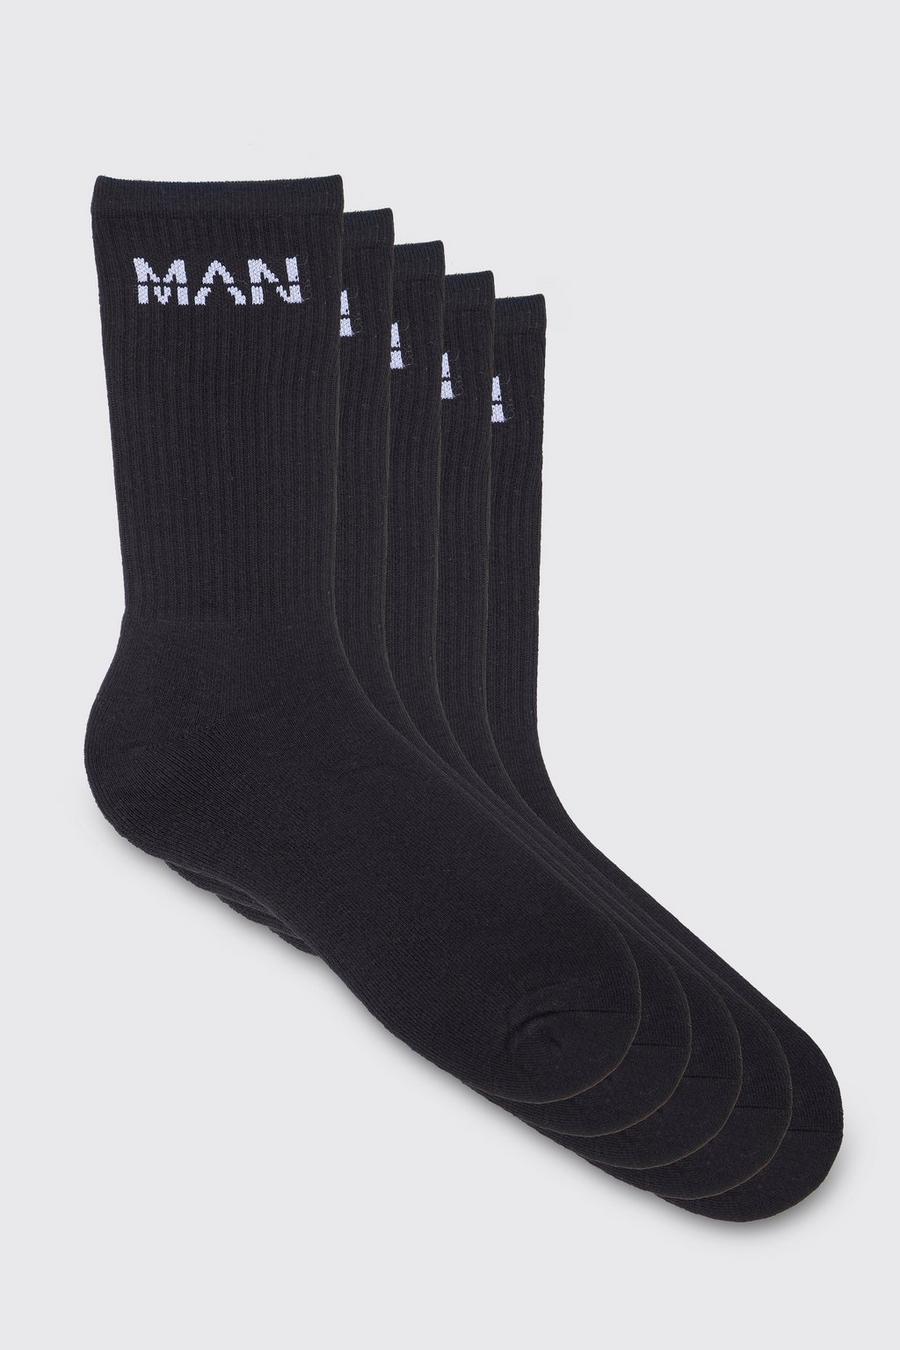 Pack de 5 pares de calcetines MAN deportivos, Black